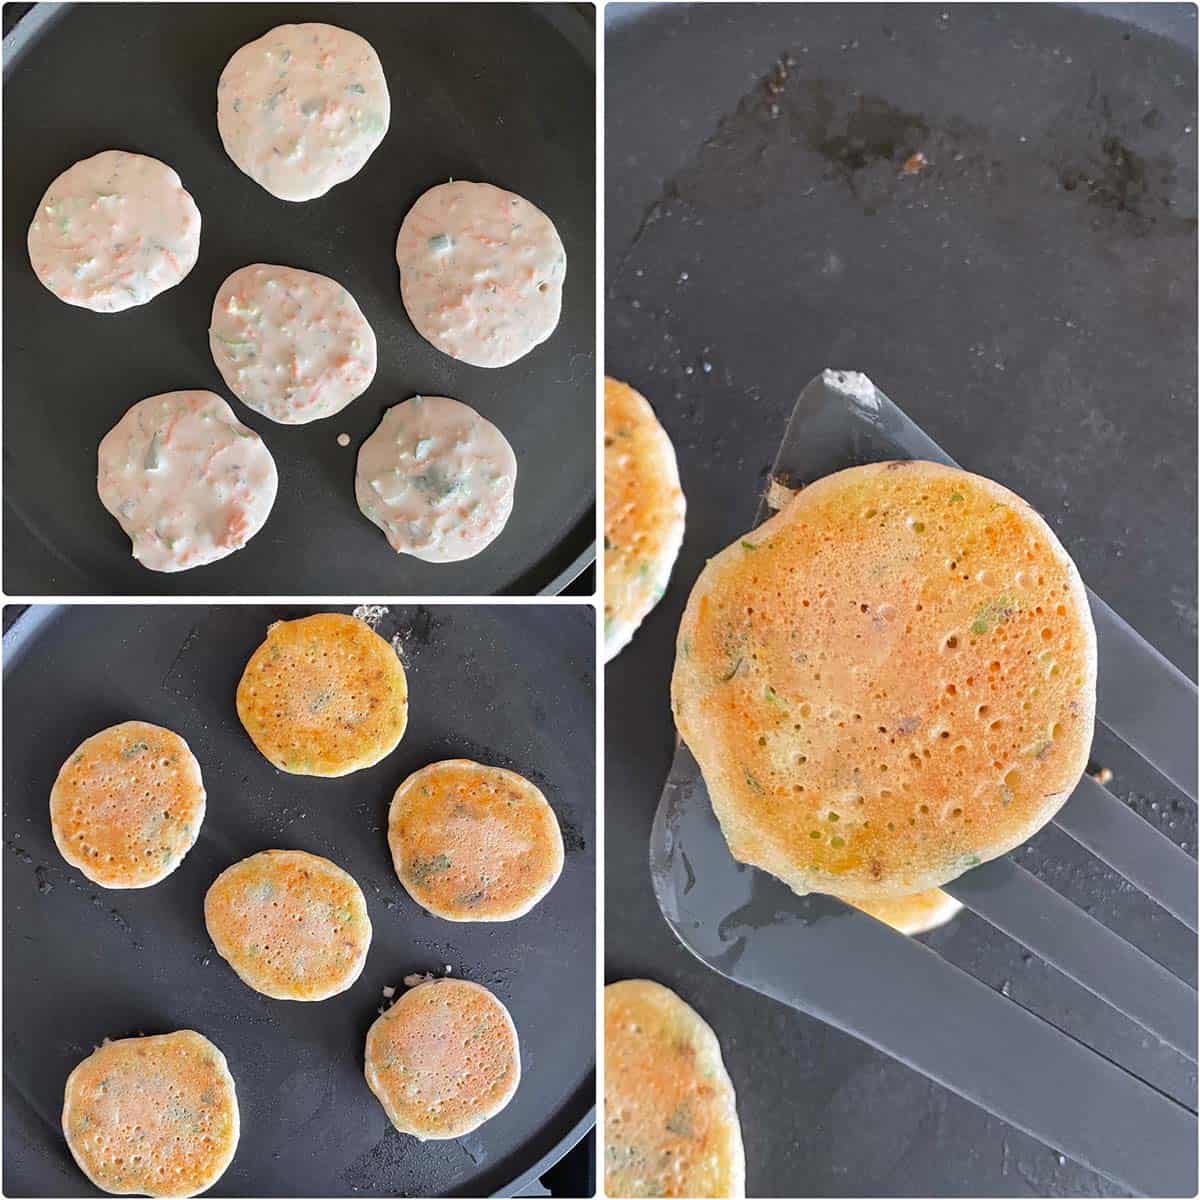 3 panel photo showing the making of savory pancakes on nonstick pan.